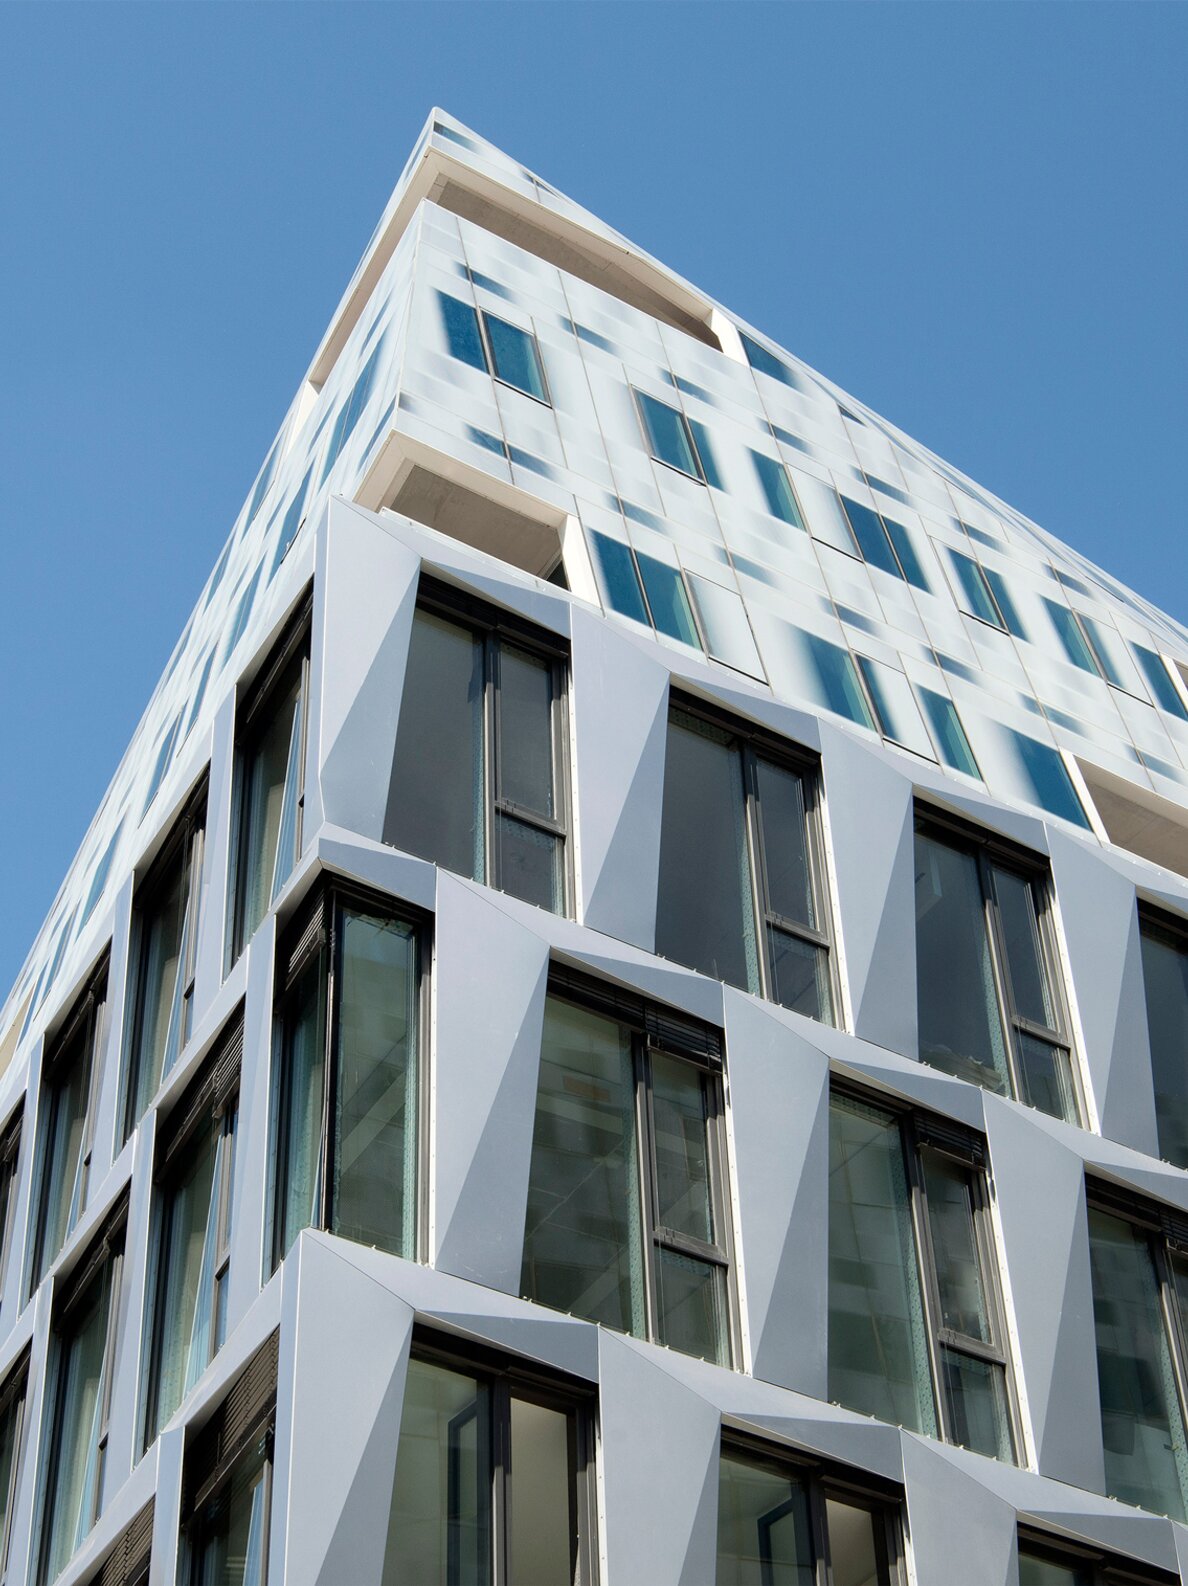 "Dorotheen Quartier"; indivudal PFD-coated aluminum facade surface